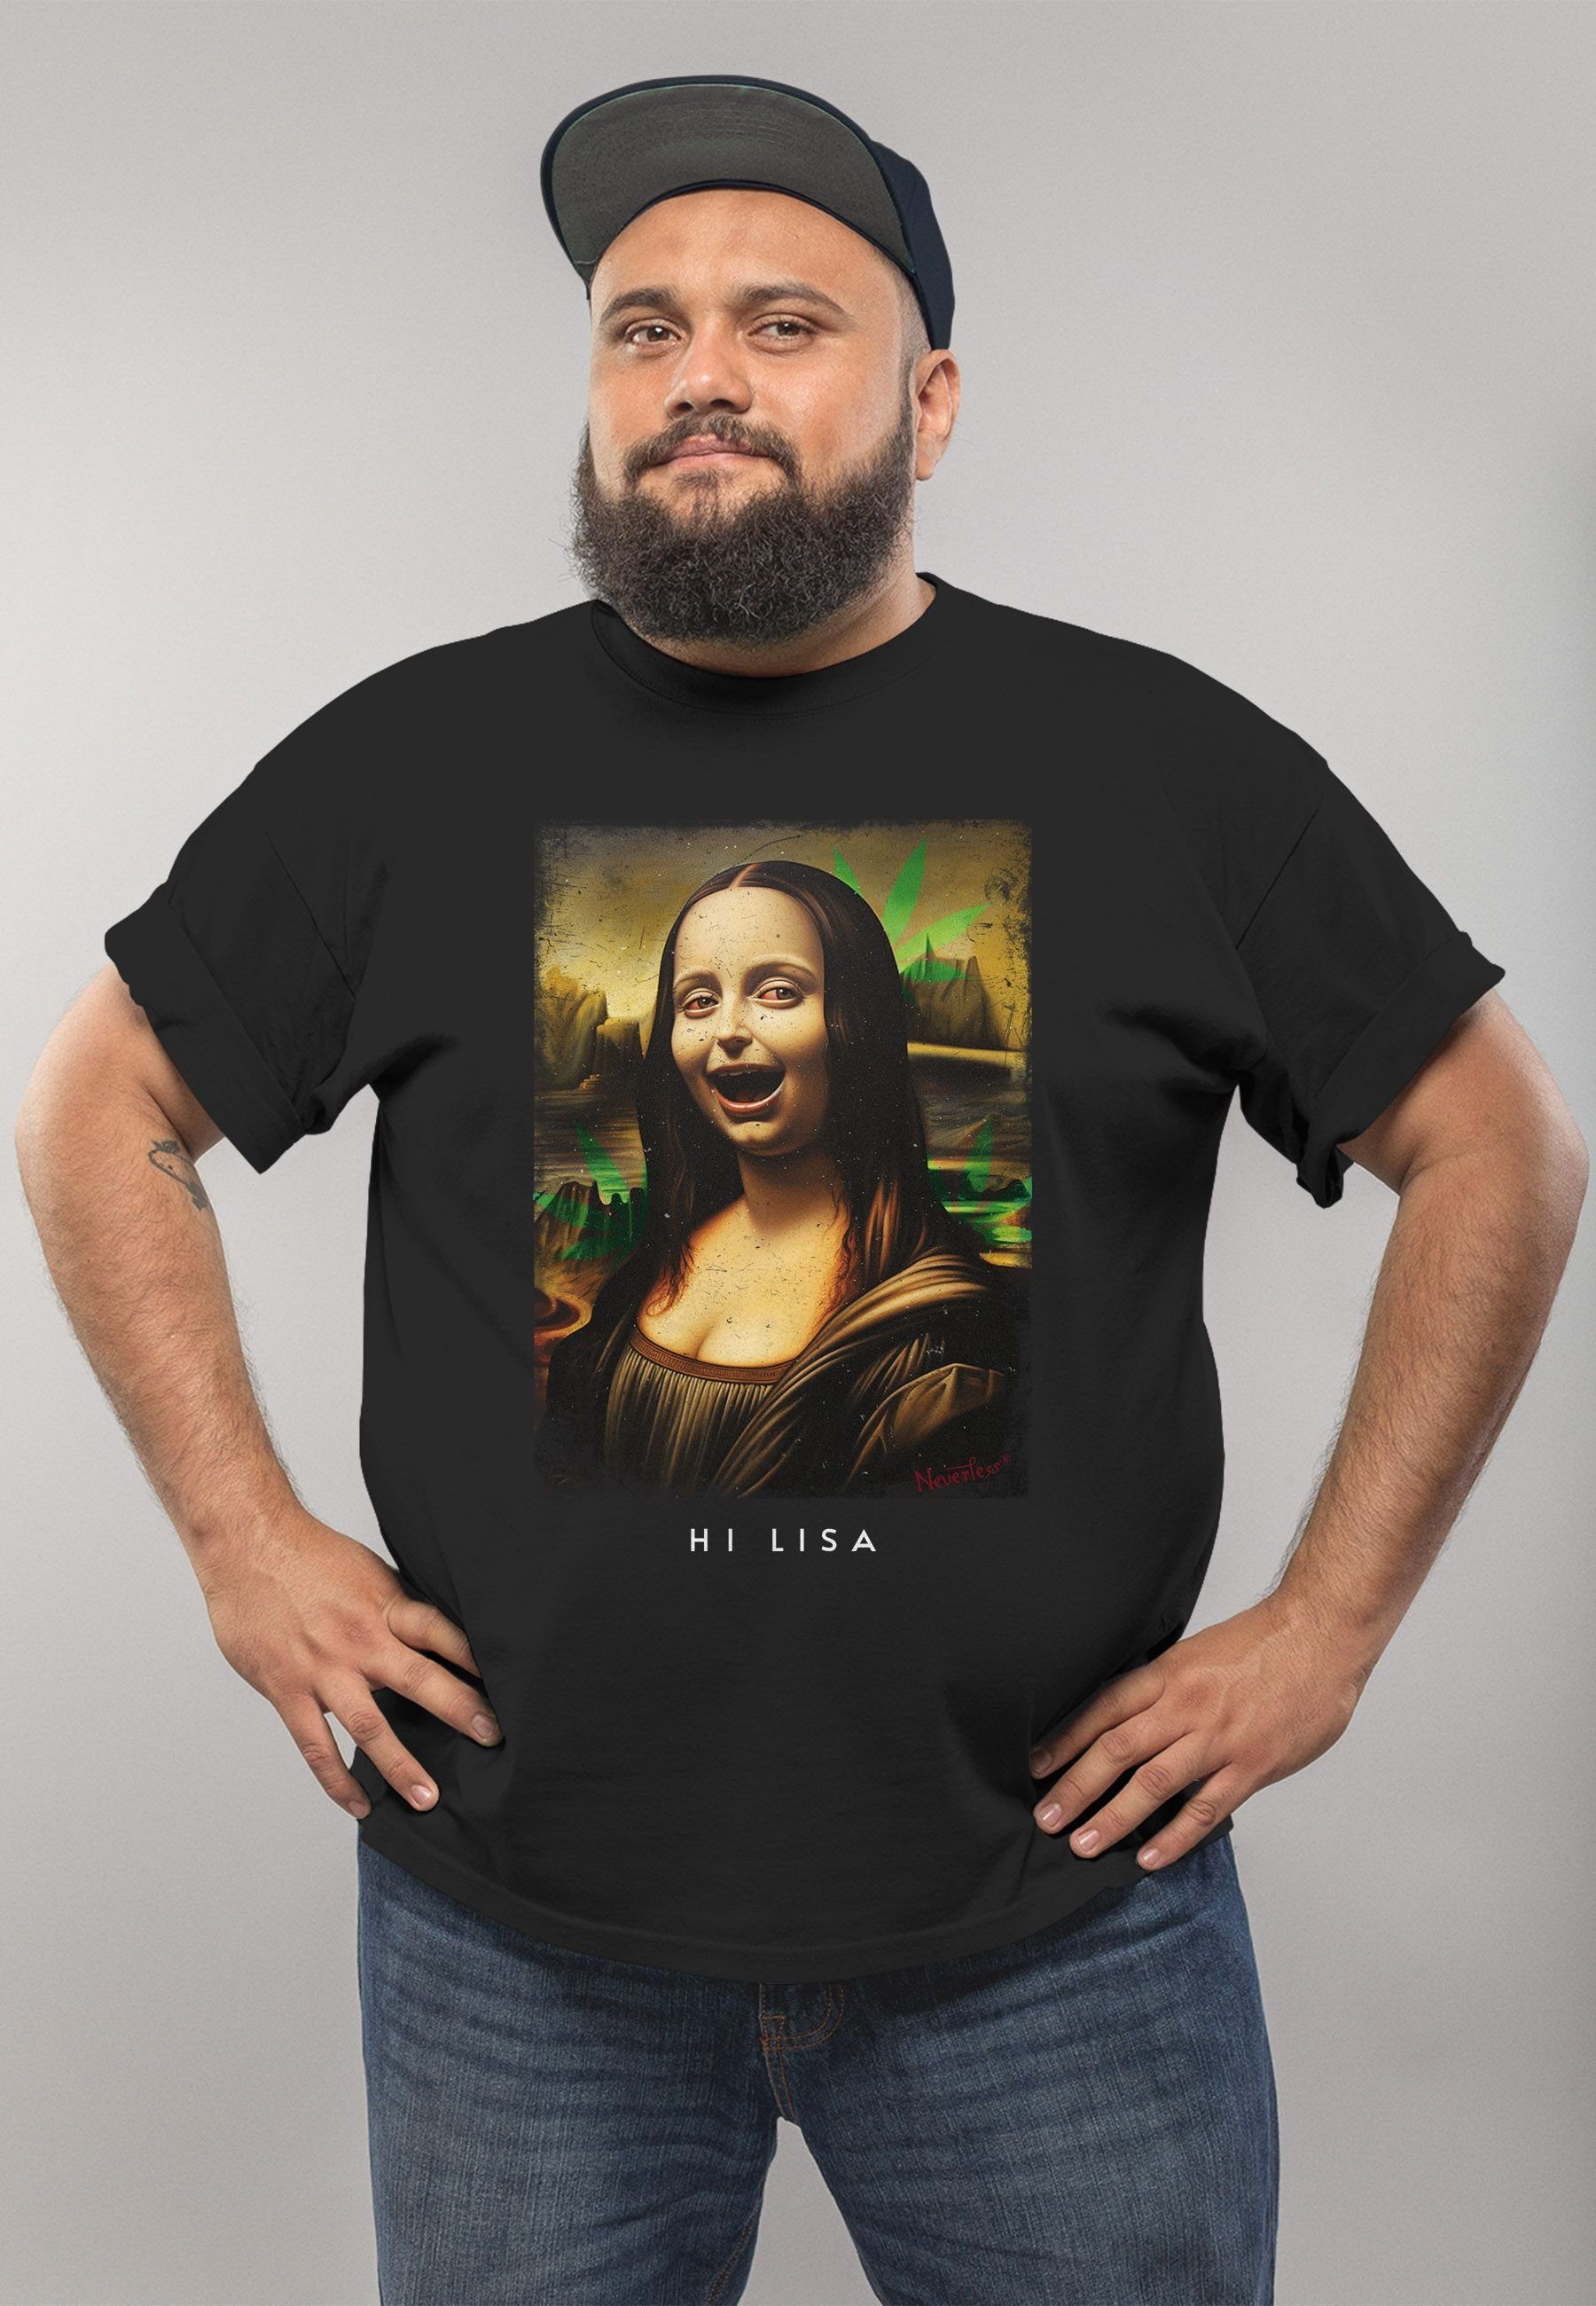 Print-Shirt Parodie Herren mit Lisa T-Shirt Print schwarz Lisa Kapuzen-Pullover Aufdruck MoonWorks Meme Print Stona Mona